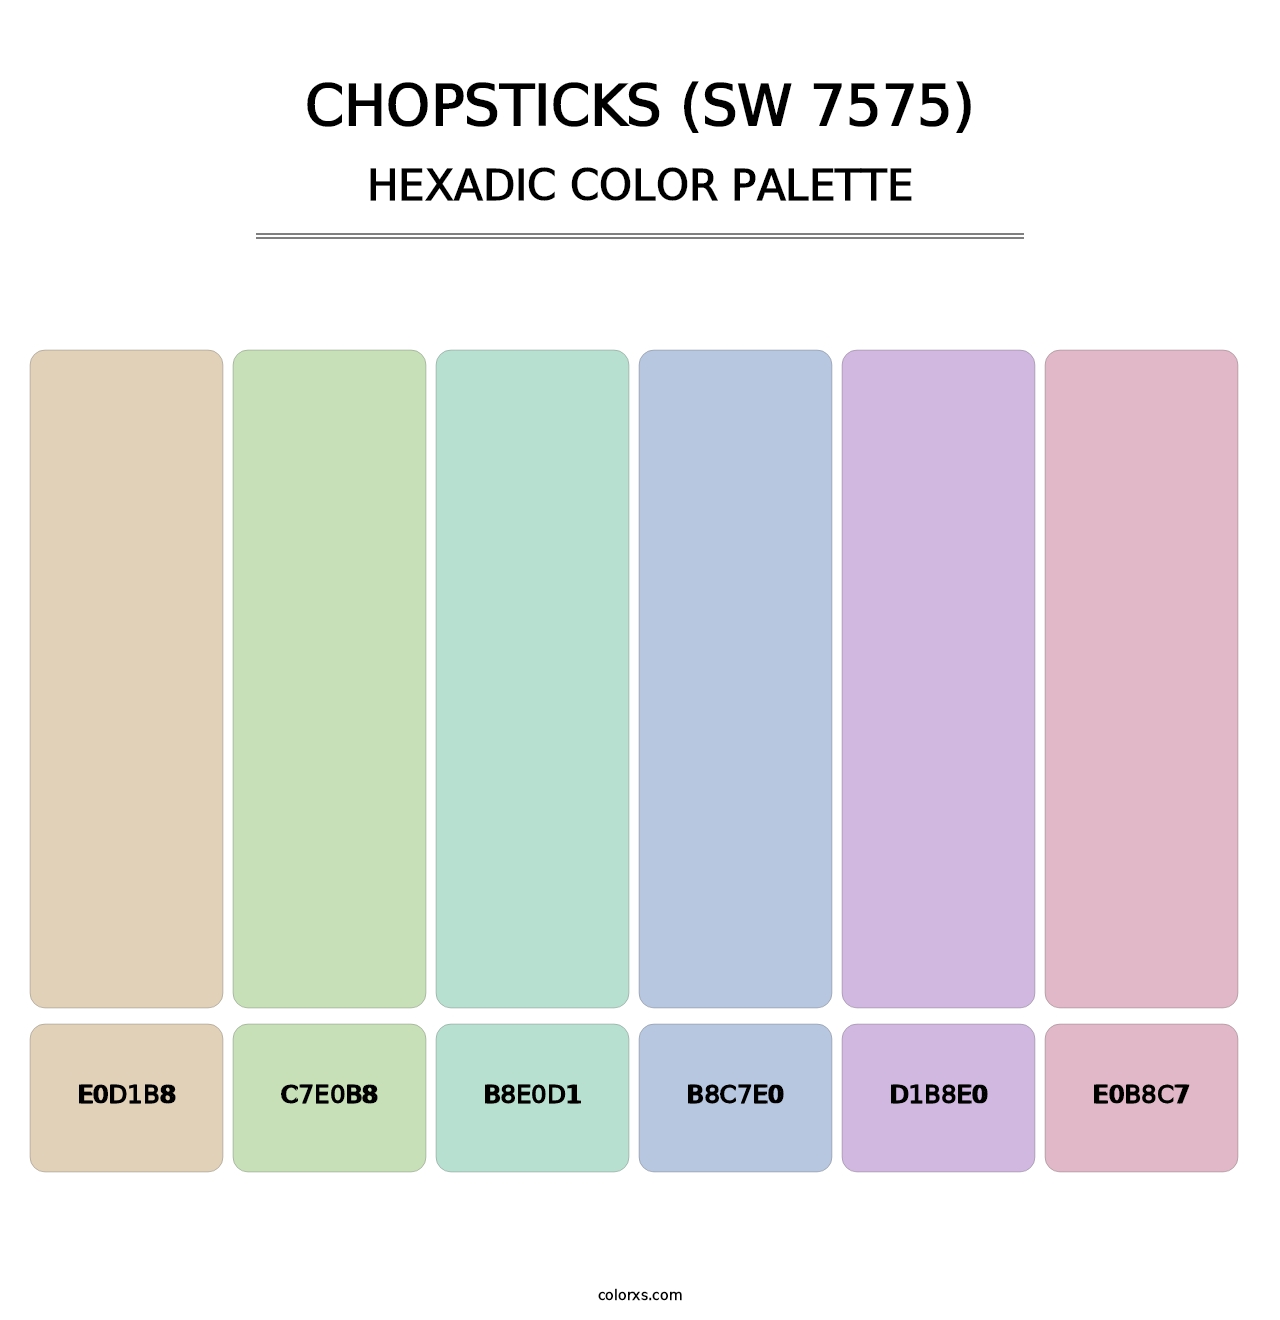 Chopsticks (SW 7575) - Hexadic Color Palette